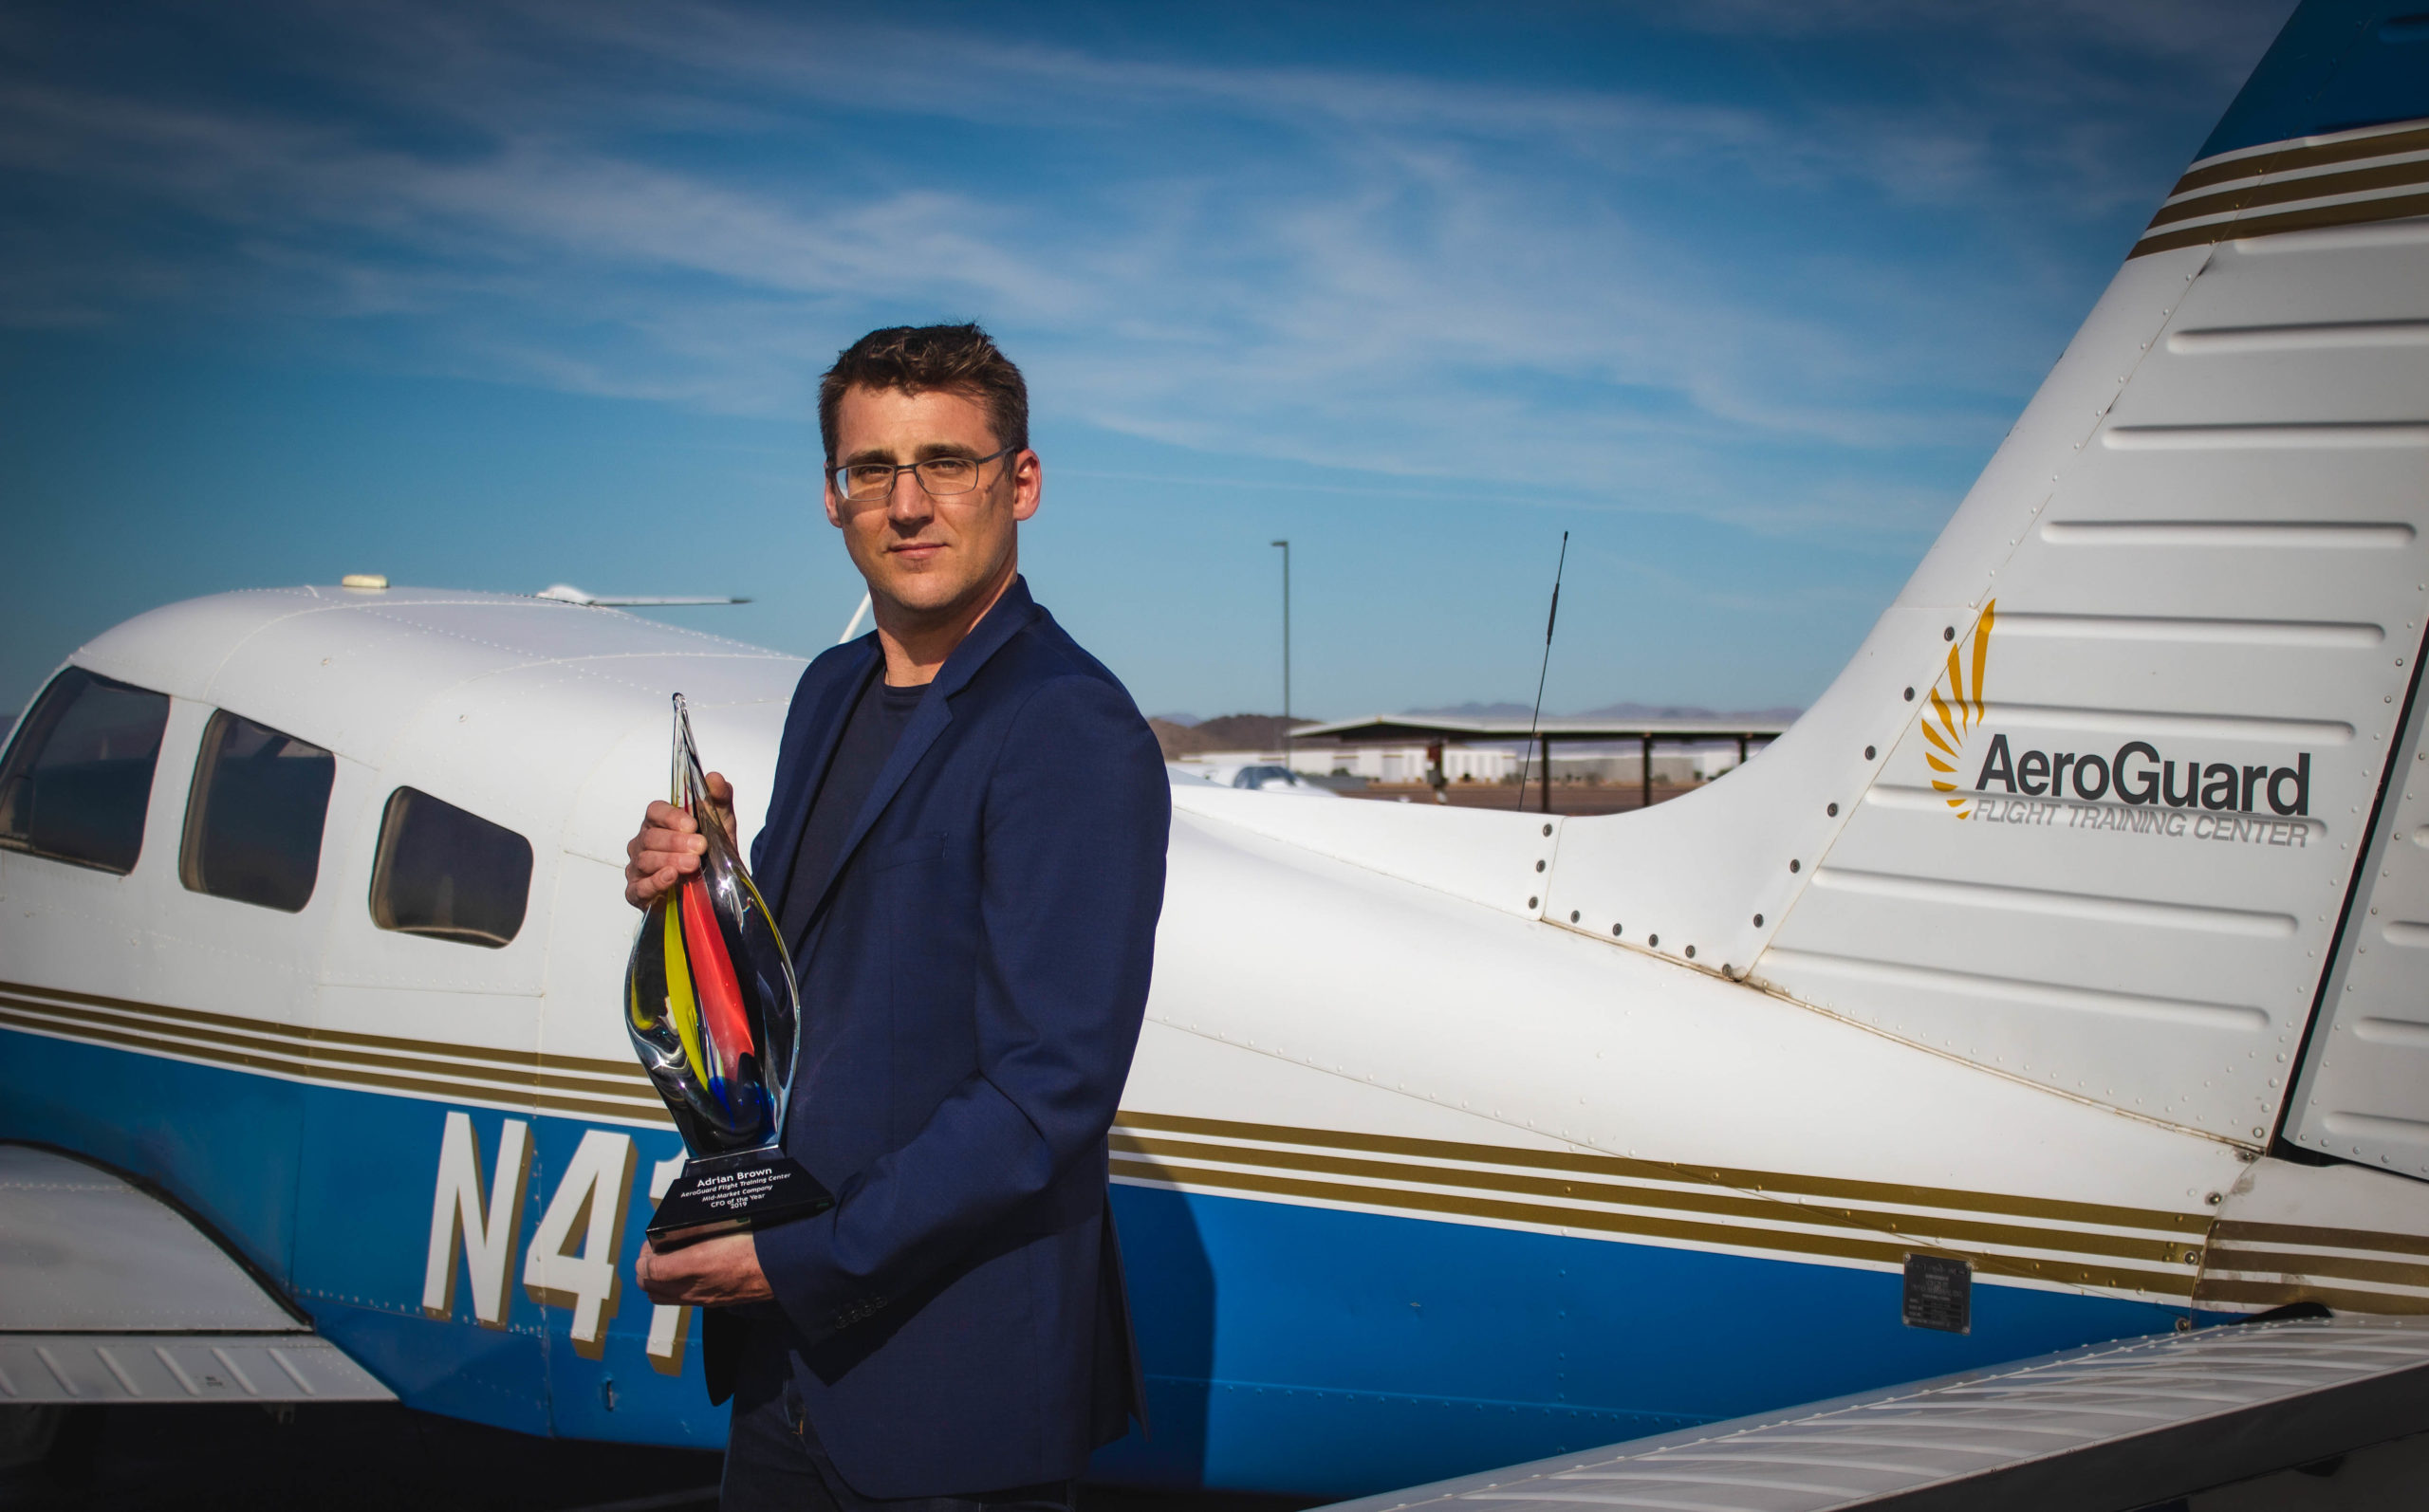 AeroGuard CFO holding award in front of plane